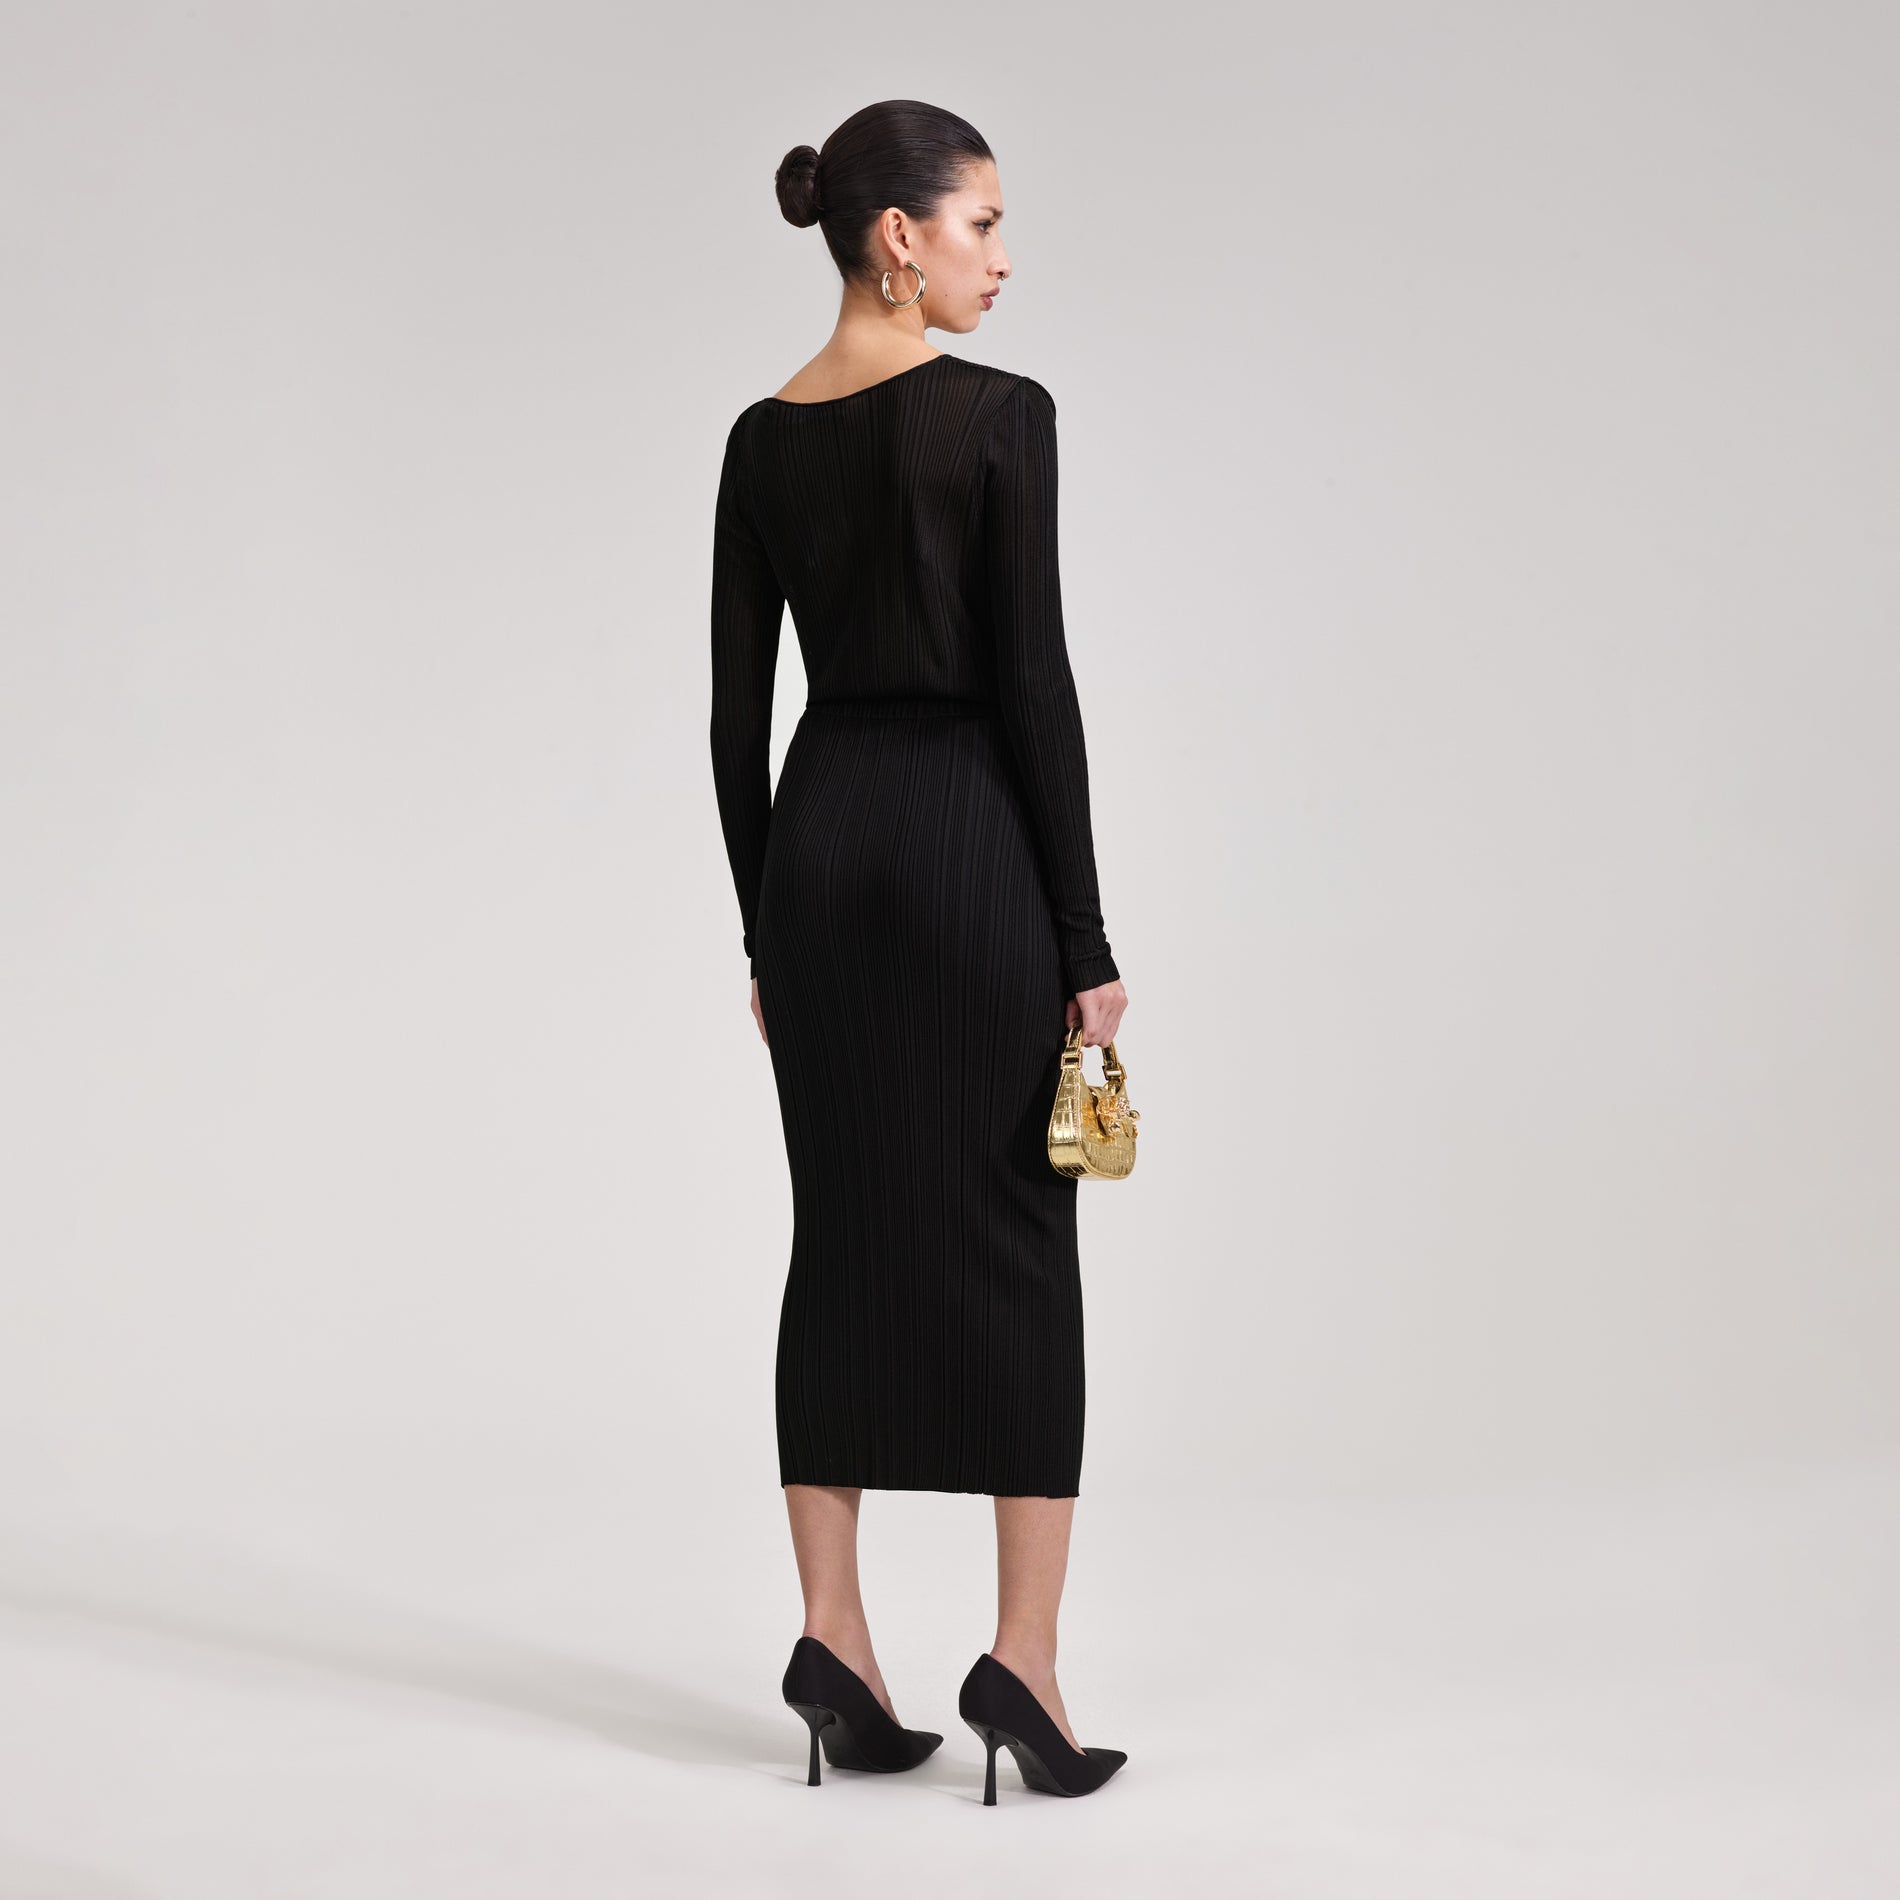 A woman wearing the Black Knit Midi Dress